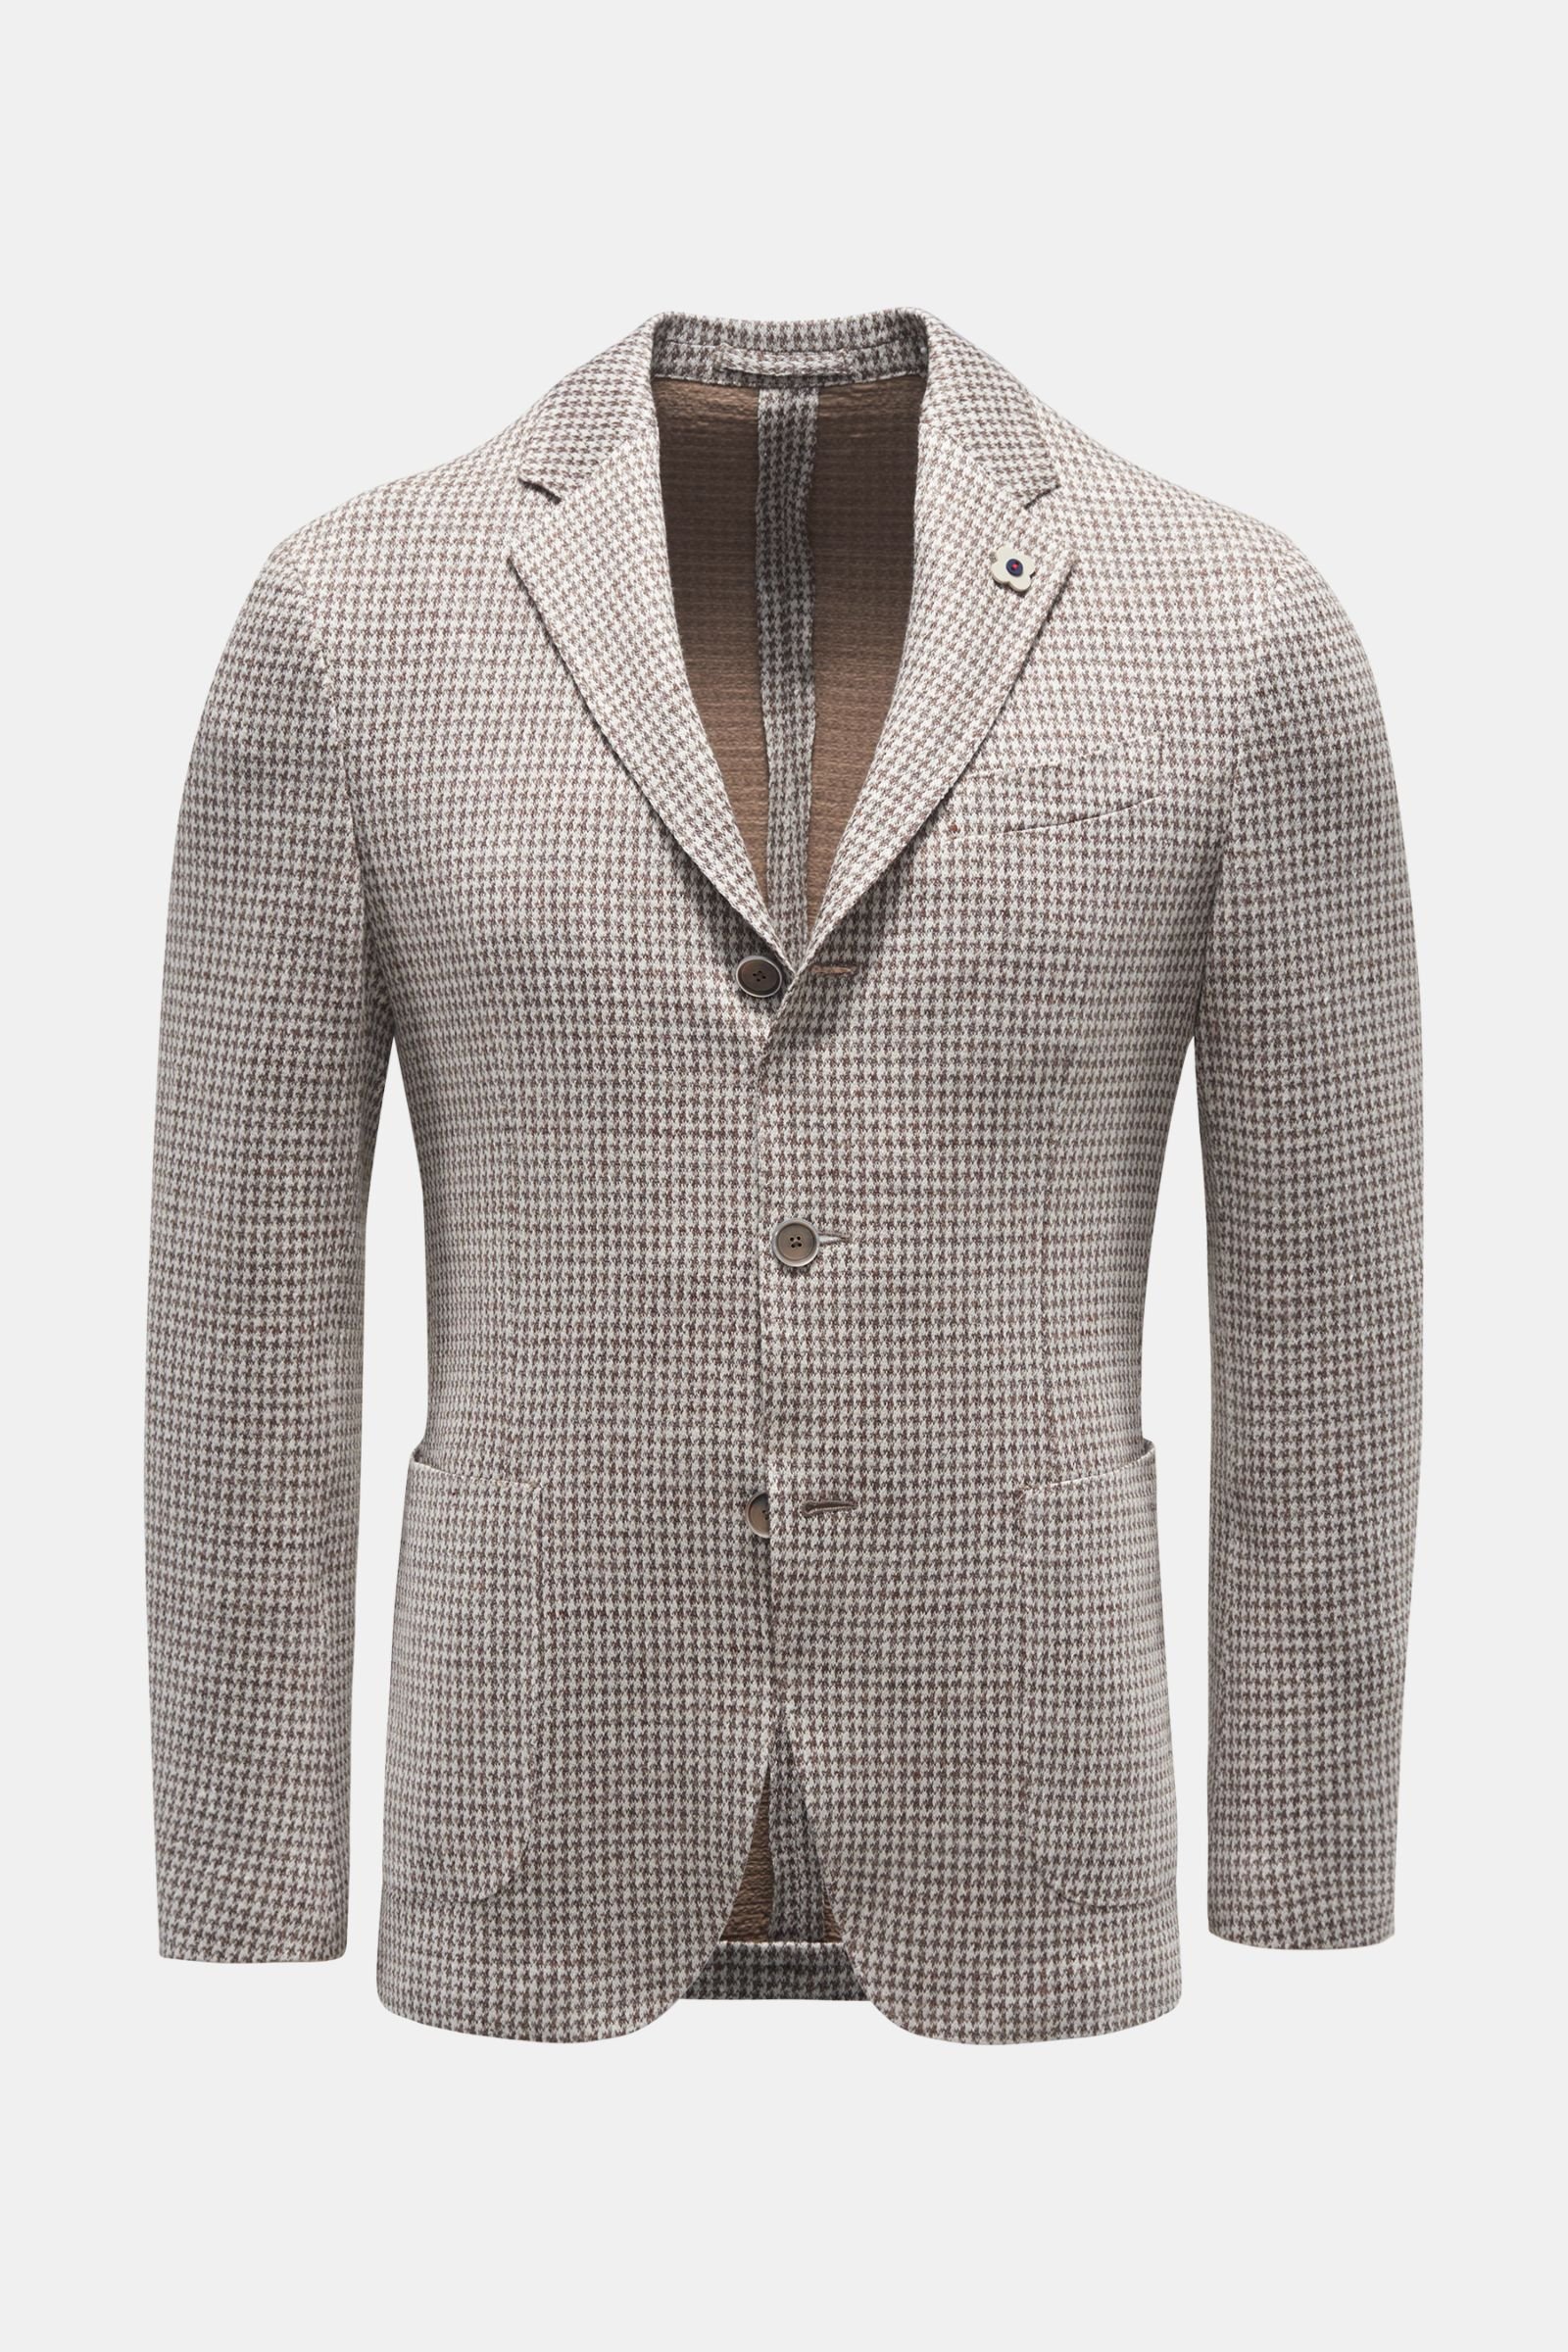 Knit blazer grey-brown/off-white checked